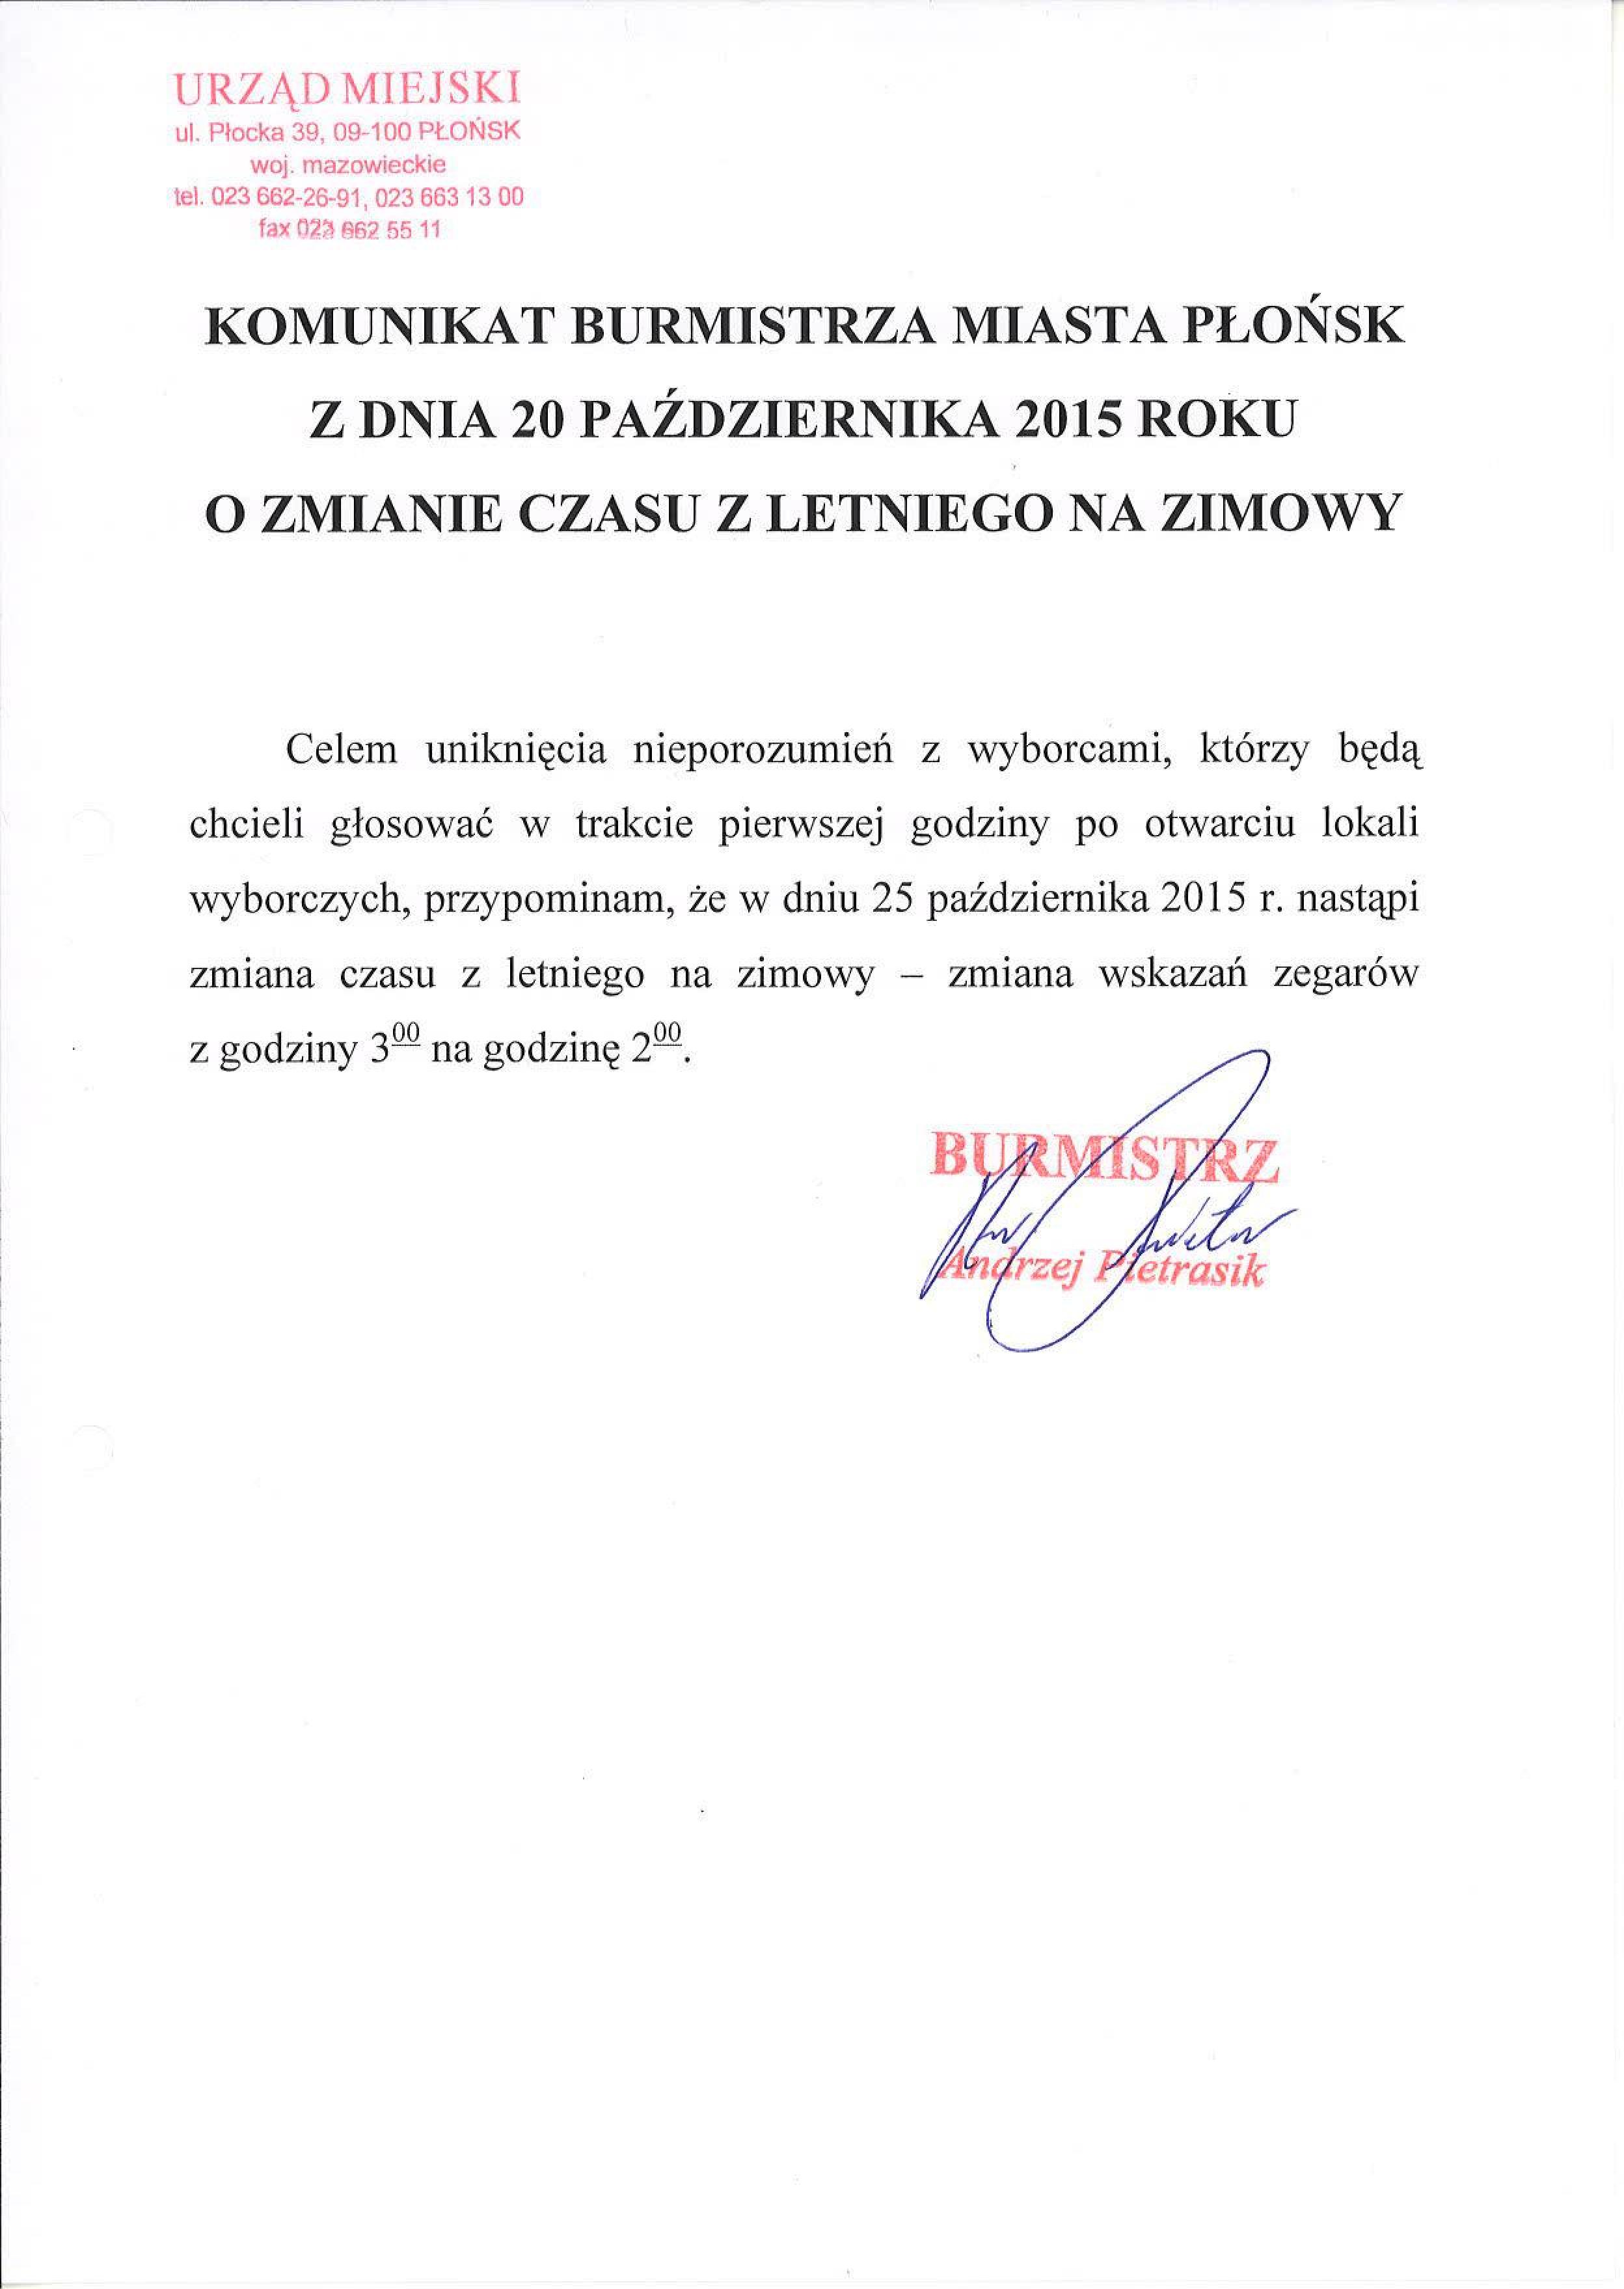 Komunikat Burmistrza Miasta Płońsk z 20.10.2015